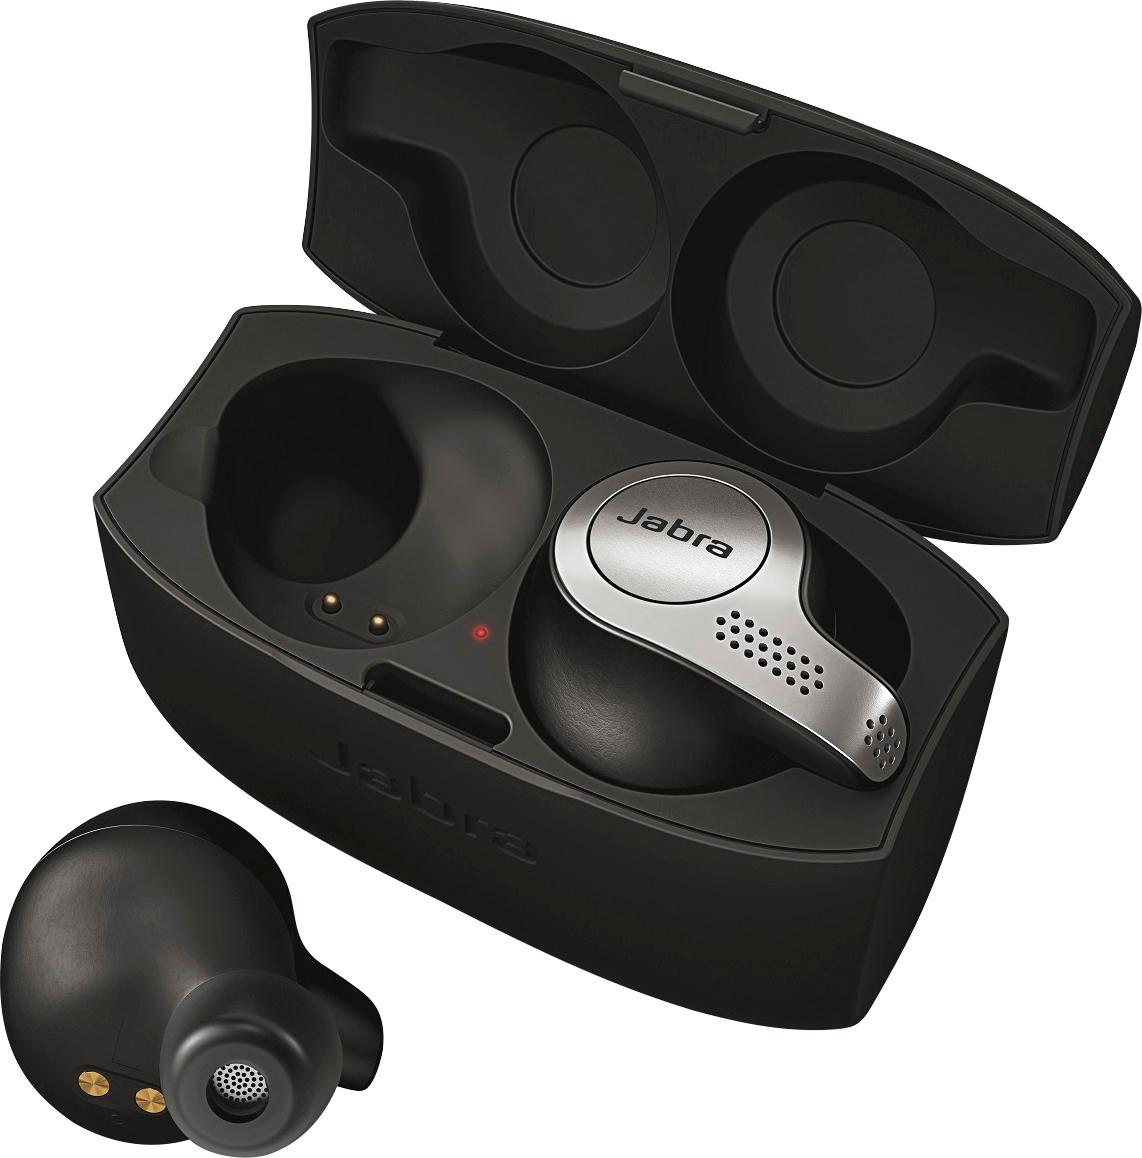 Buy: Jabra True Wireless Earbud Headphones Titanium Black 100-99000000-02